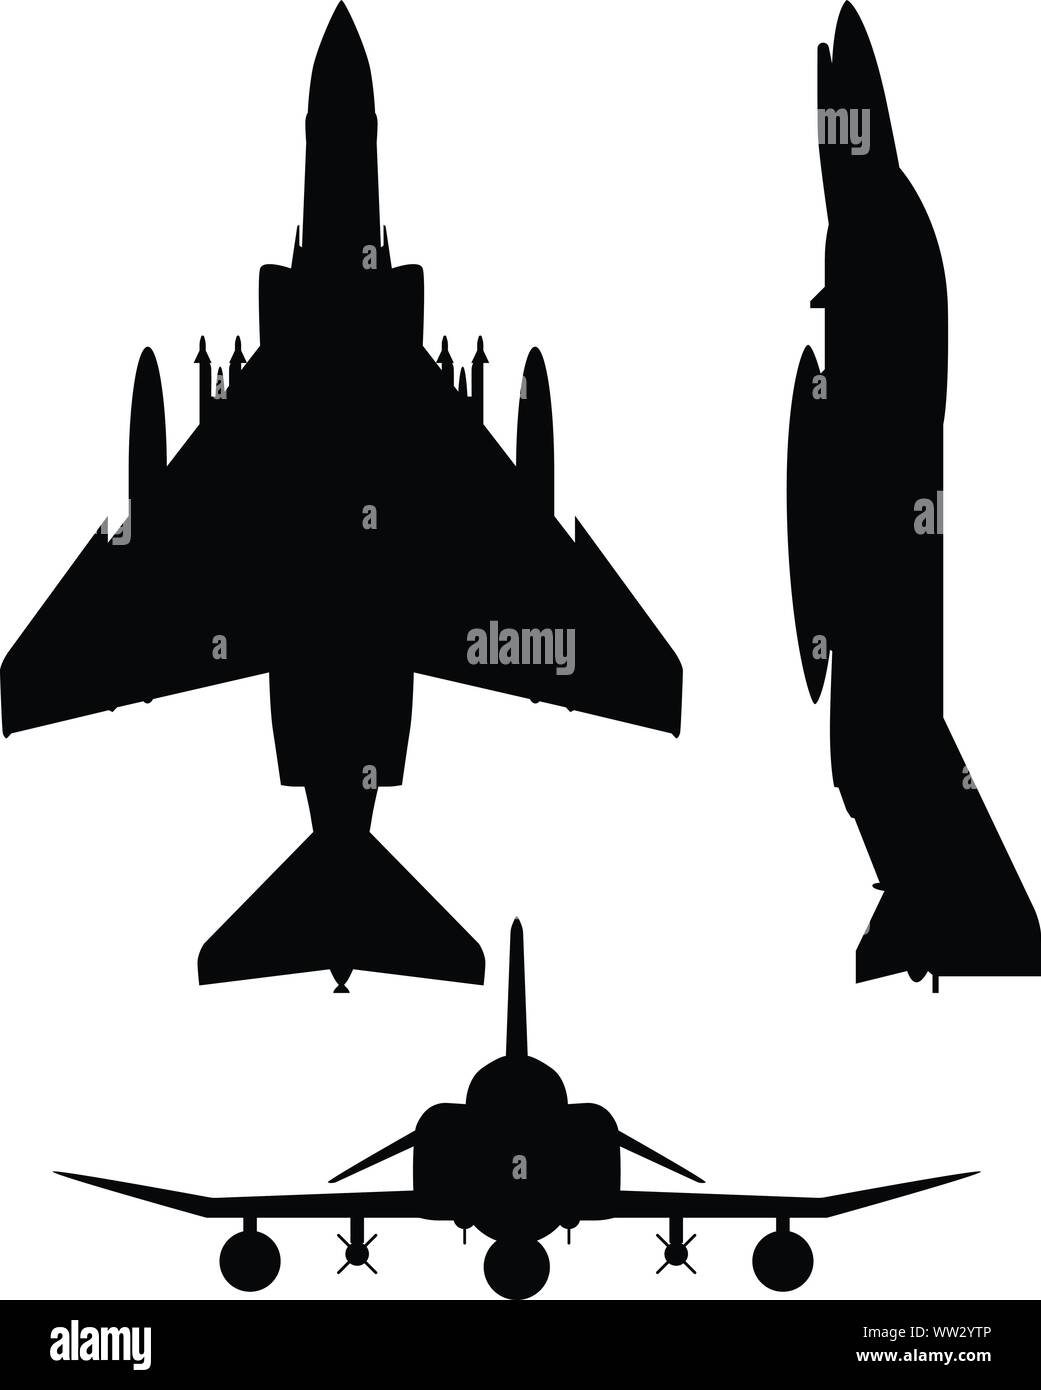 F-4 Phantom II Military Fighter Jet Aircraft Silhouette Vector Illustration Stock Vector